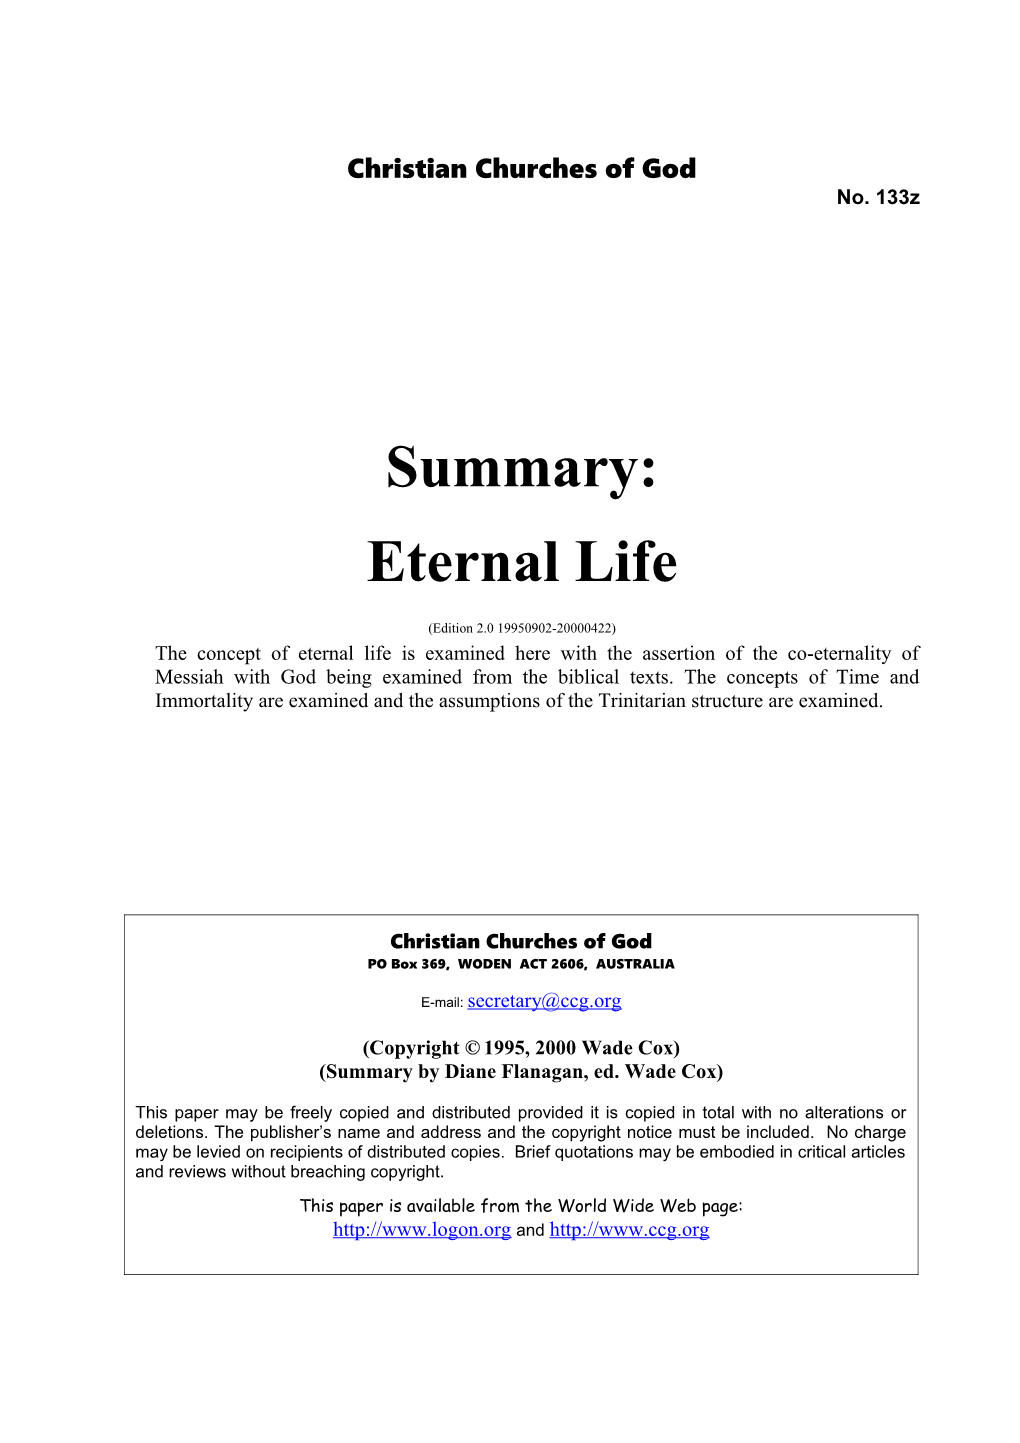 Summary: Eternal Life (No. 133Z)